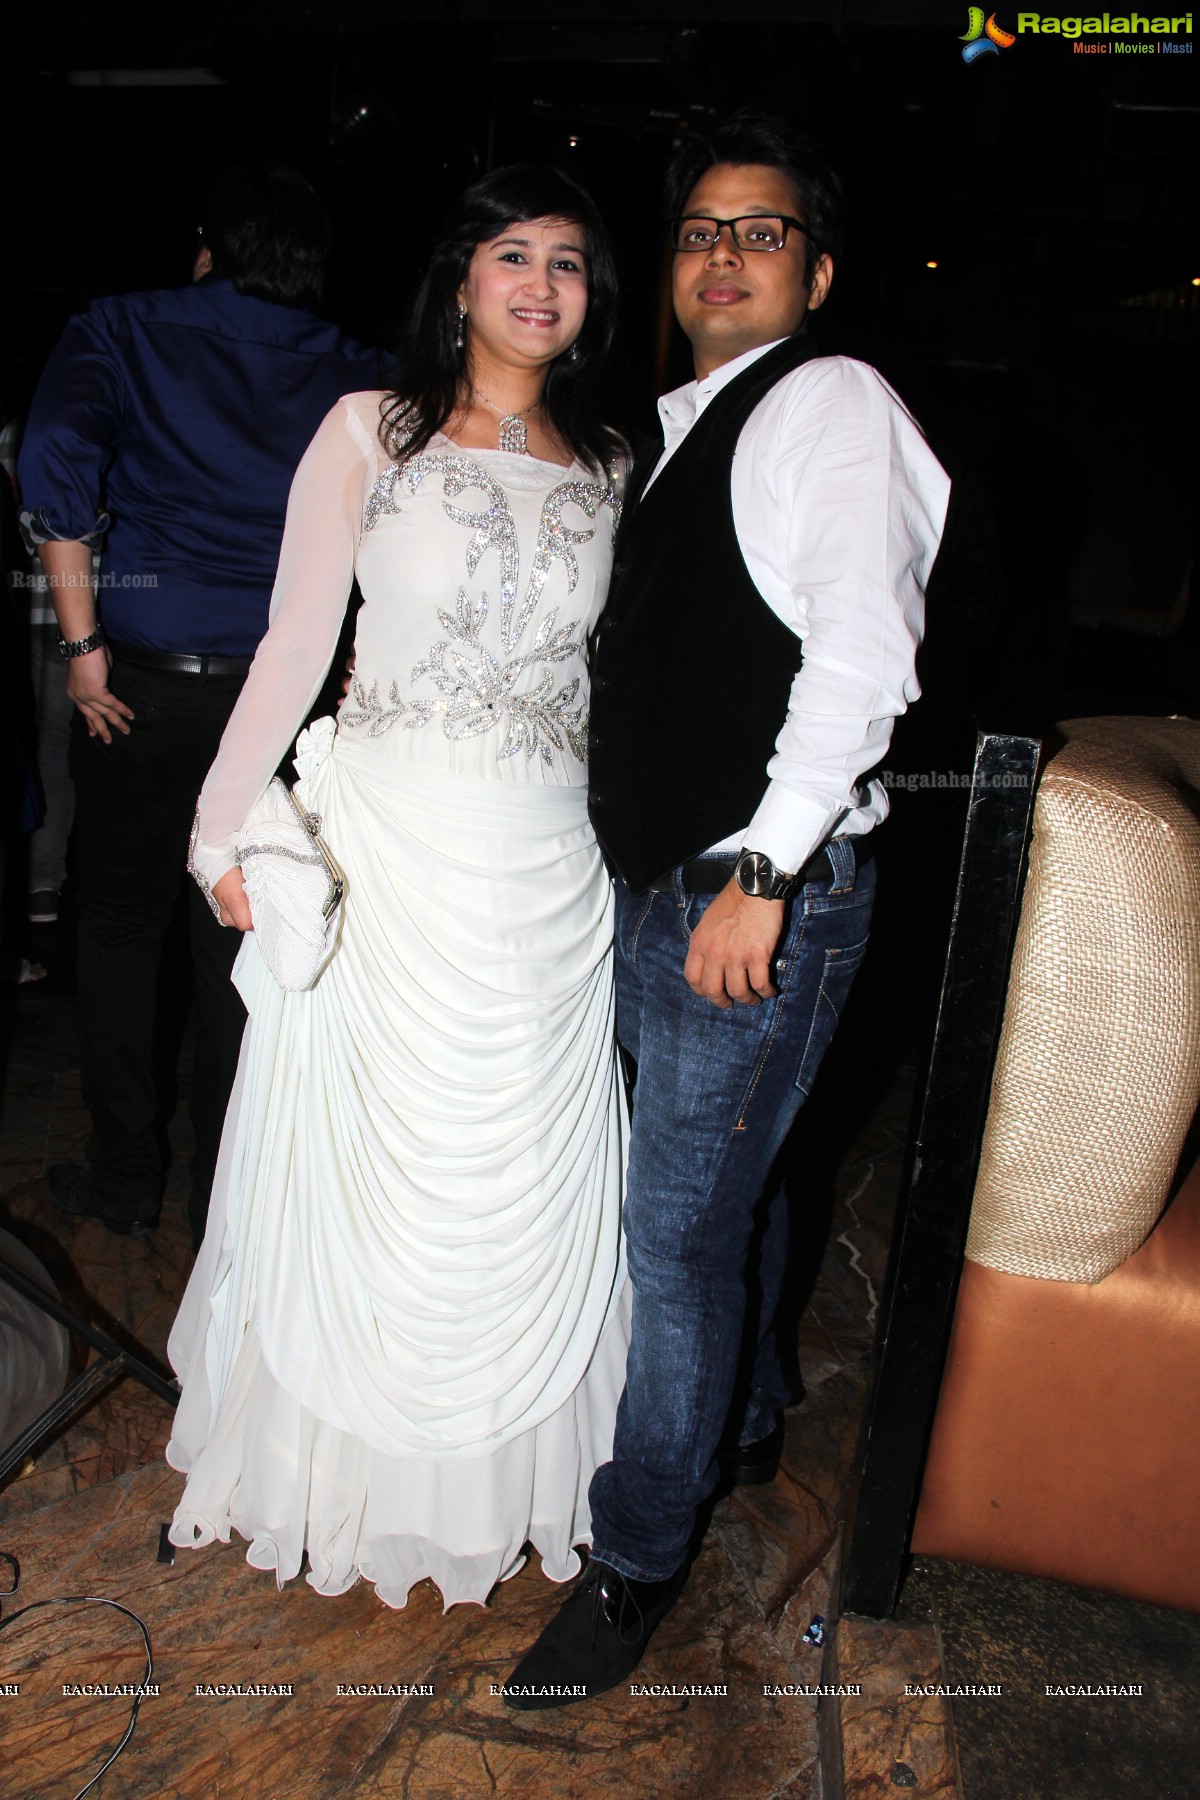 Subhash & Archana Gupta Silver Wedding Anniversary at Kismet